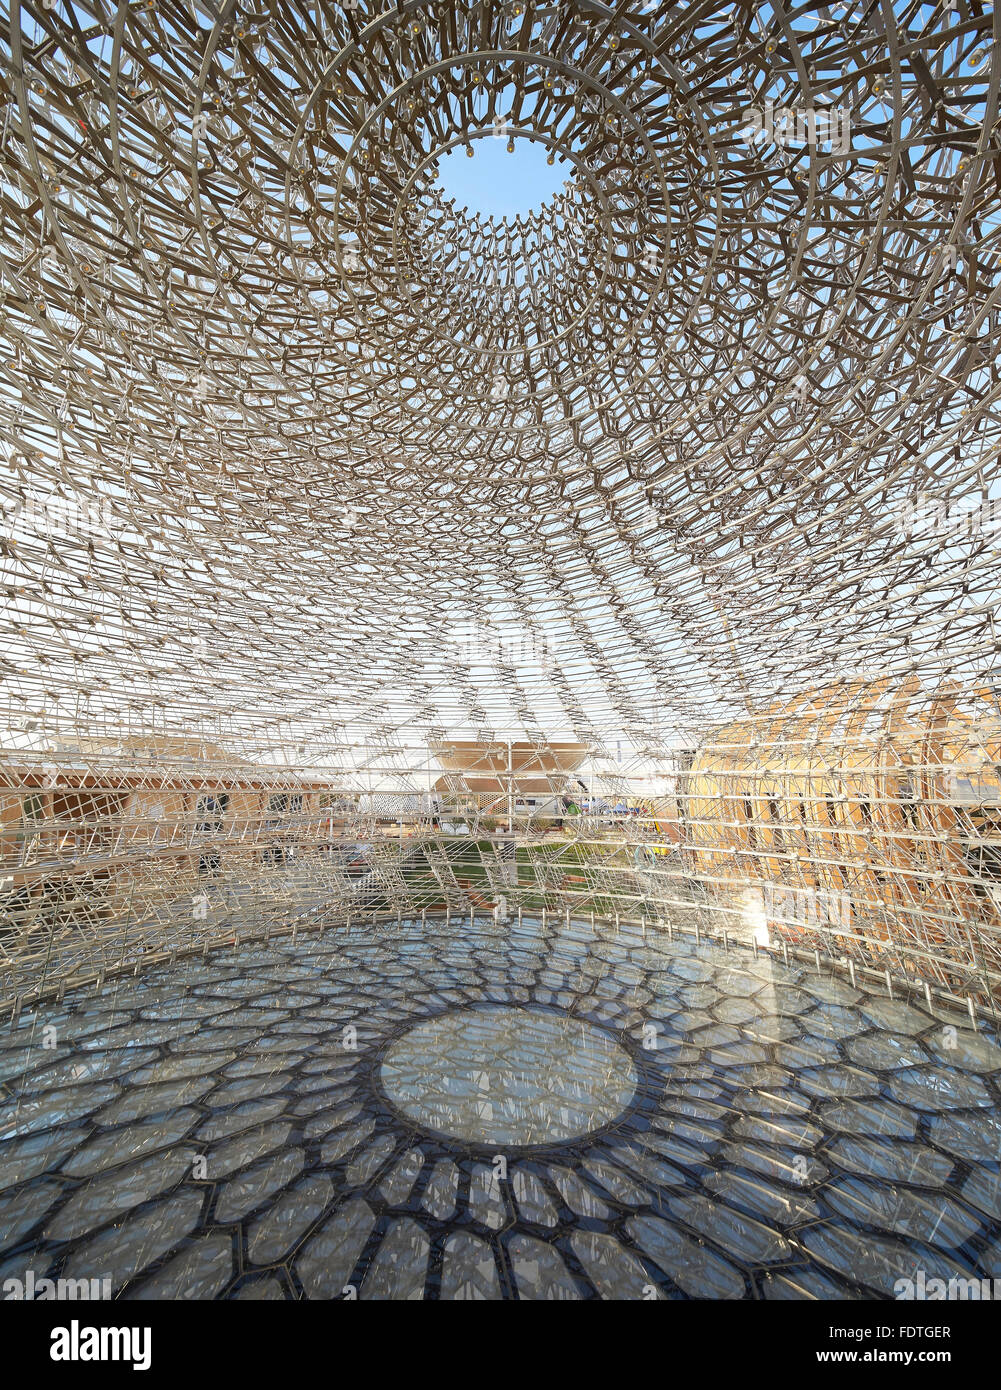 Platform below hive dome. Milan Expo 2015, UK Pavilion, Milan, Italy. Architect: Wolfgang Buttress, 2015. Stock Photo